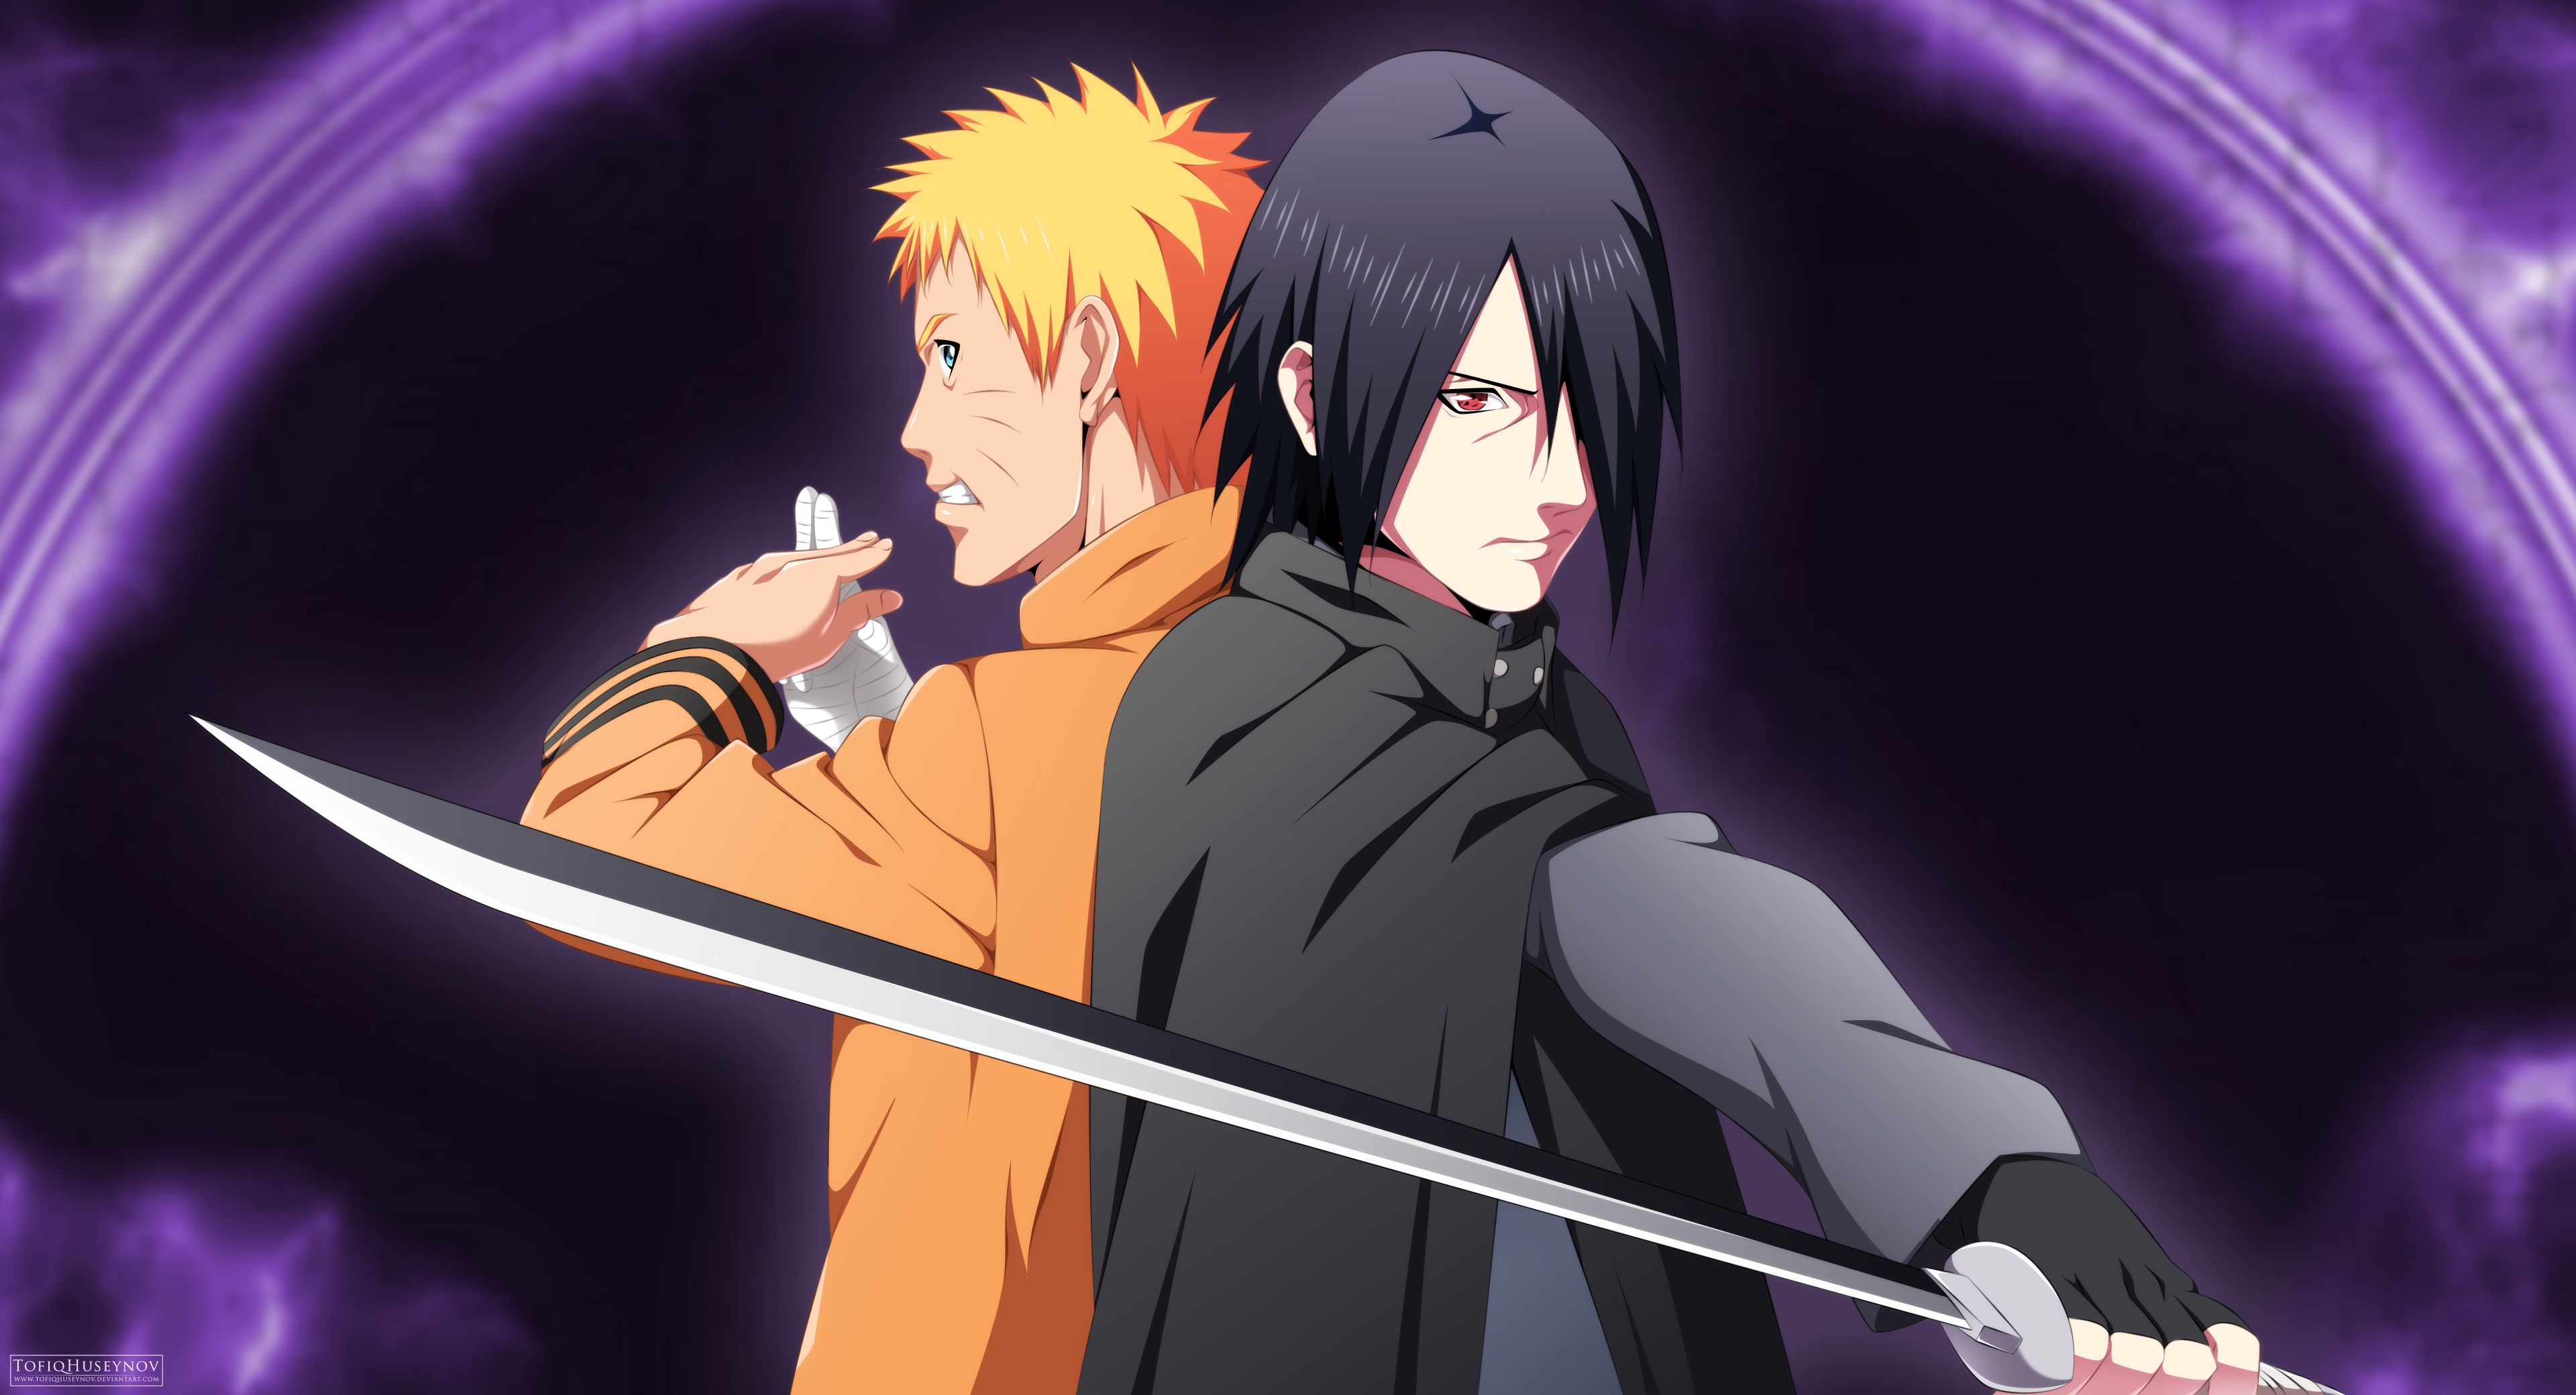 Baixar papel de parede para celular de Anime, Naruto, Sasuke Uchiha, Naruto Uzumaki, Boruto gratuito.